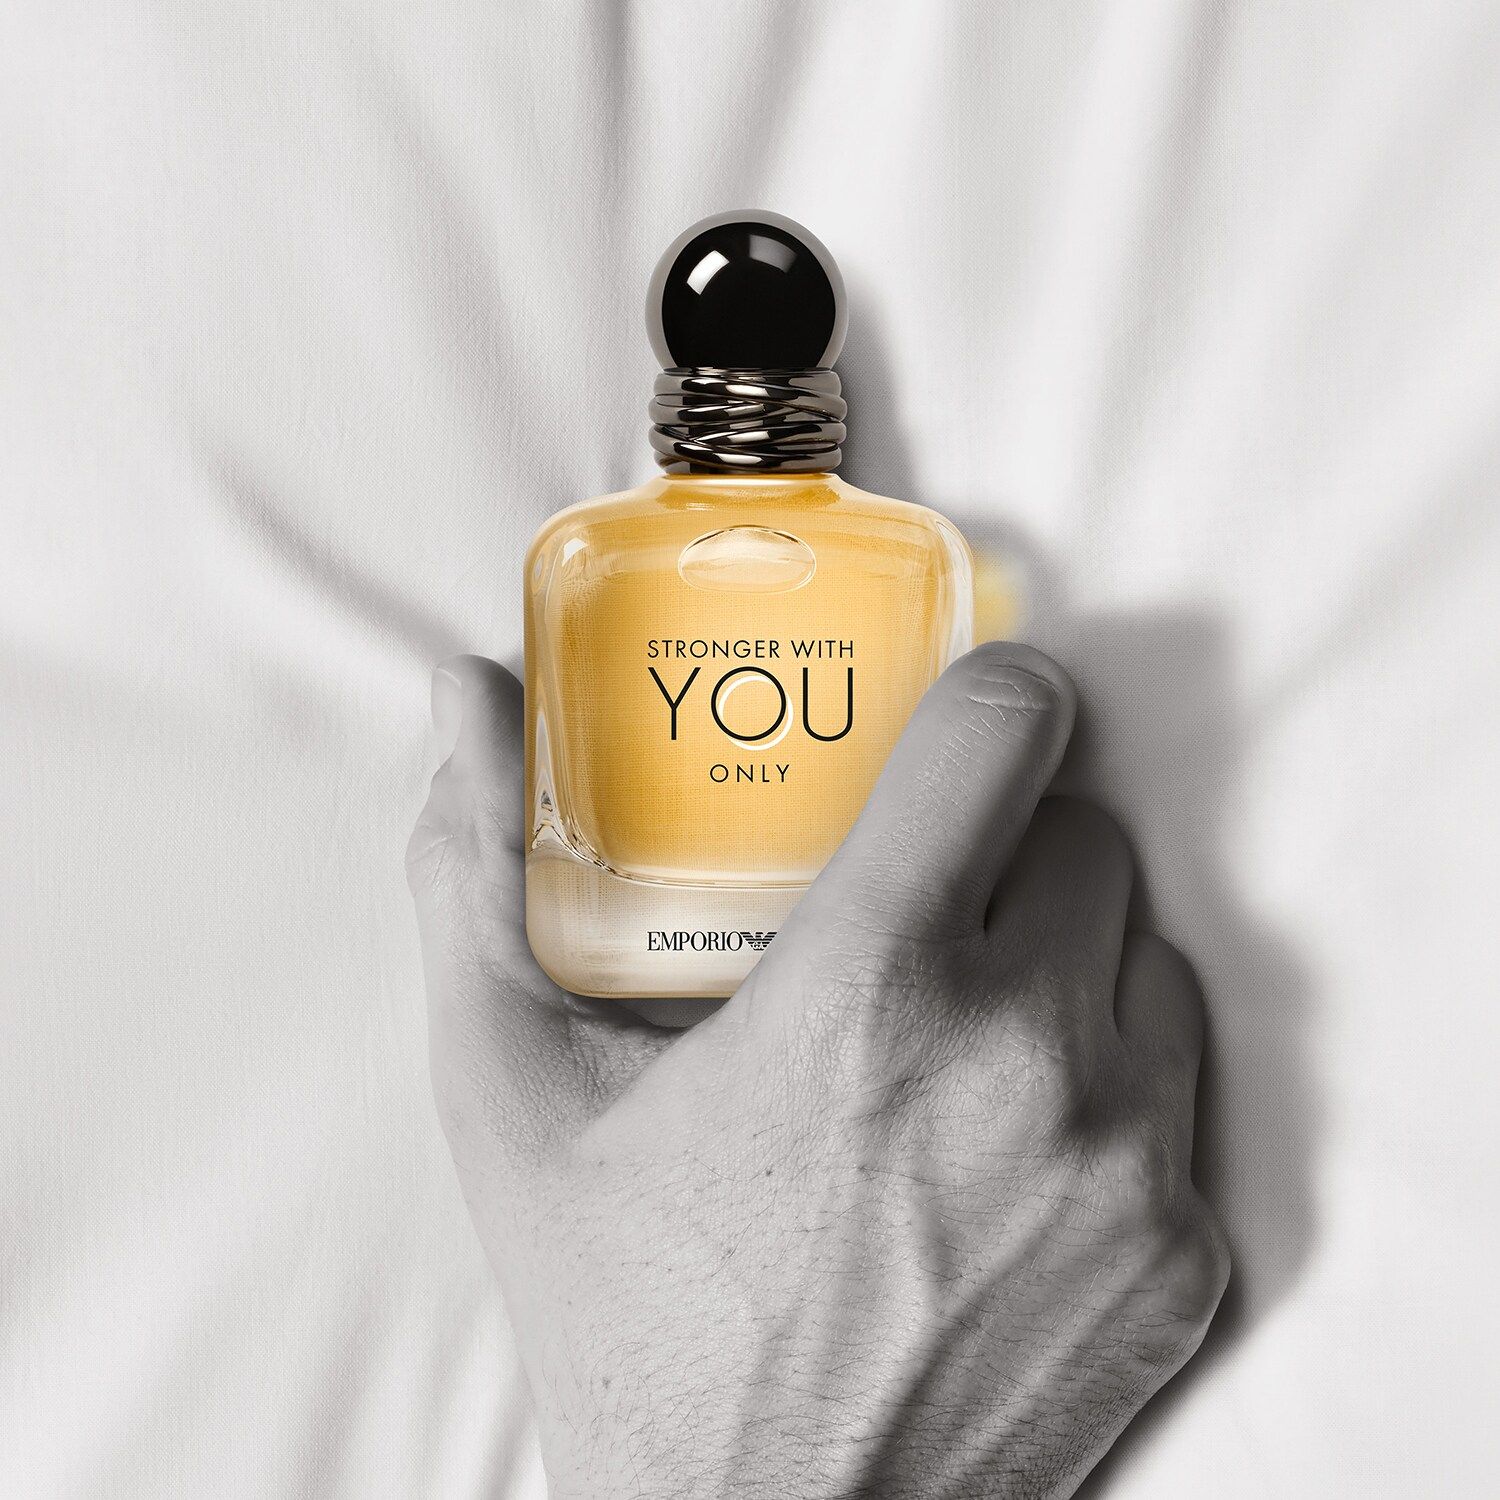 Giorgio Armani - Emporio Armani Stronger With You Only parfum 2022 